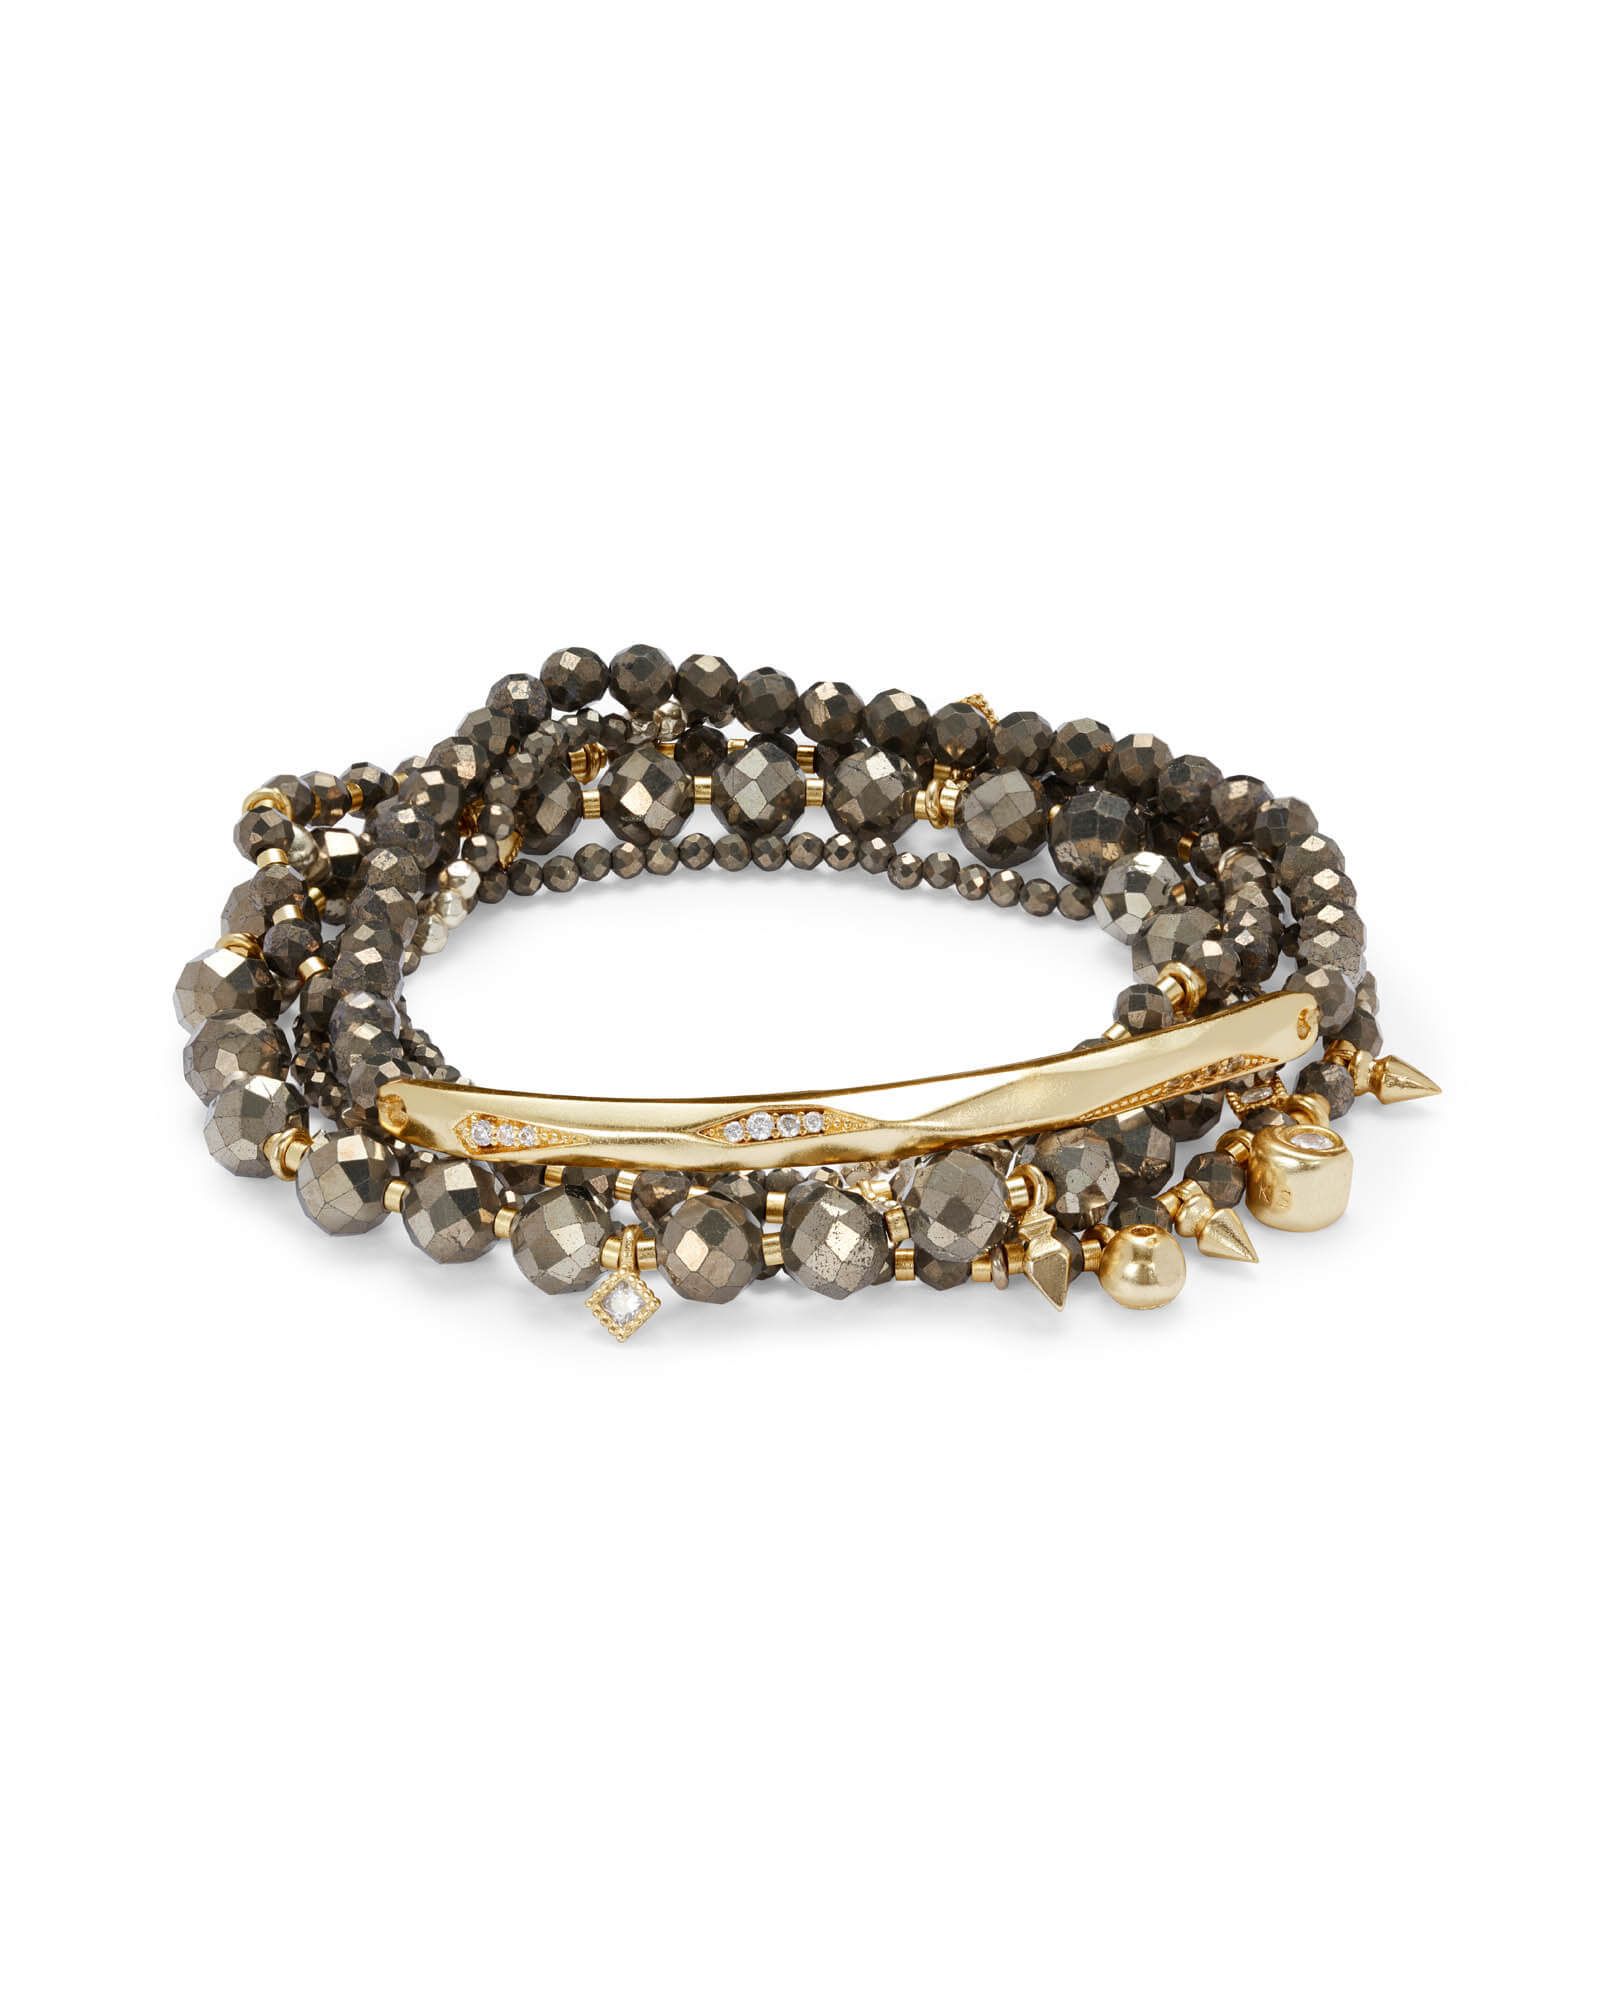 Supak Beaded Bracelet Set in Brown Pyrite | Kendra Scott | Kendra Scott